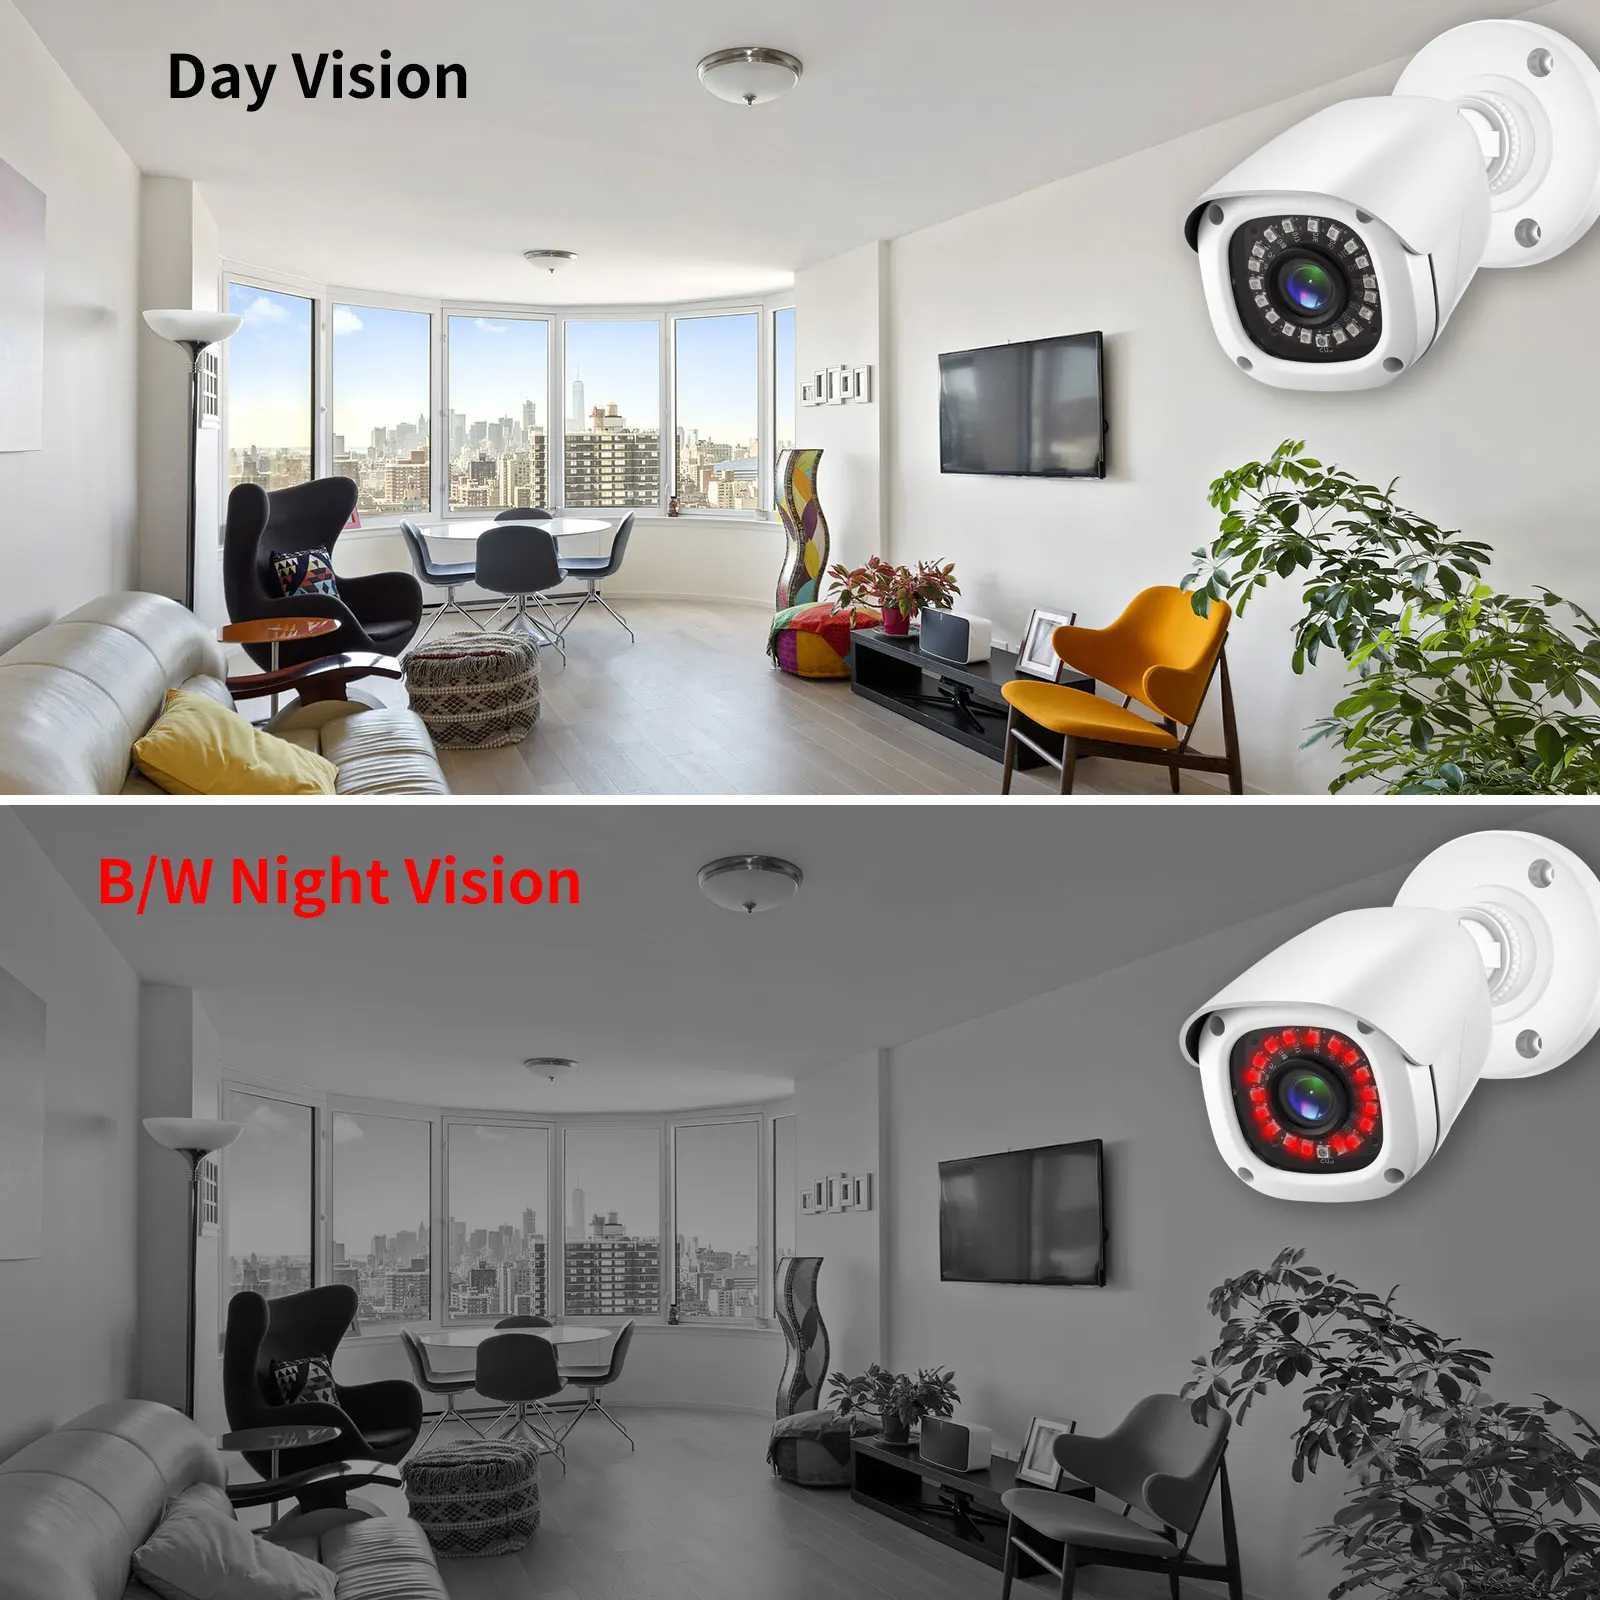 IP -camera's Gadinan HD 720P 1080P 5MP AHD Camera Home Wired Surveillance Infrarood Night Vision Bullet Outdoor BNC CCTV Security Camera 240413